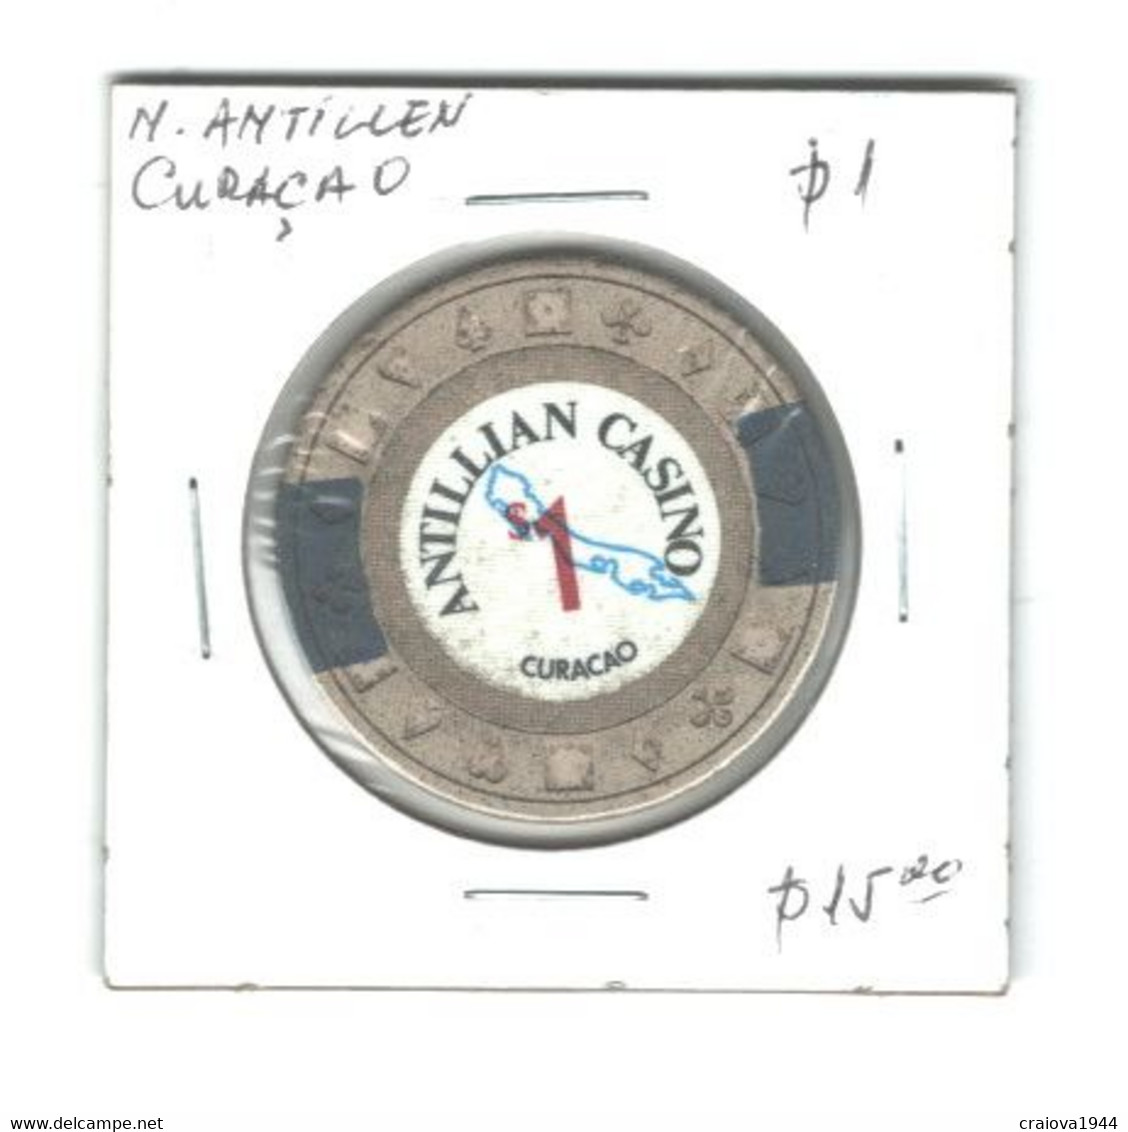 NETHERLAND - ANTILLEN, CURACAO, "ANTILLIAN CASINO"  $1.00 CHIP I BELIVE NEVER BEEN USED - Casino